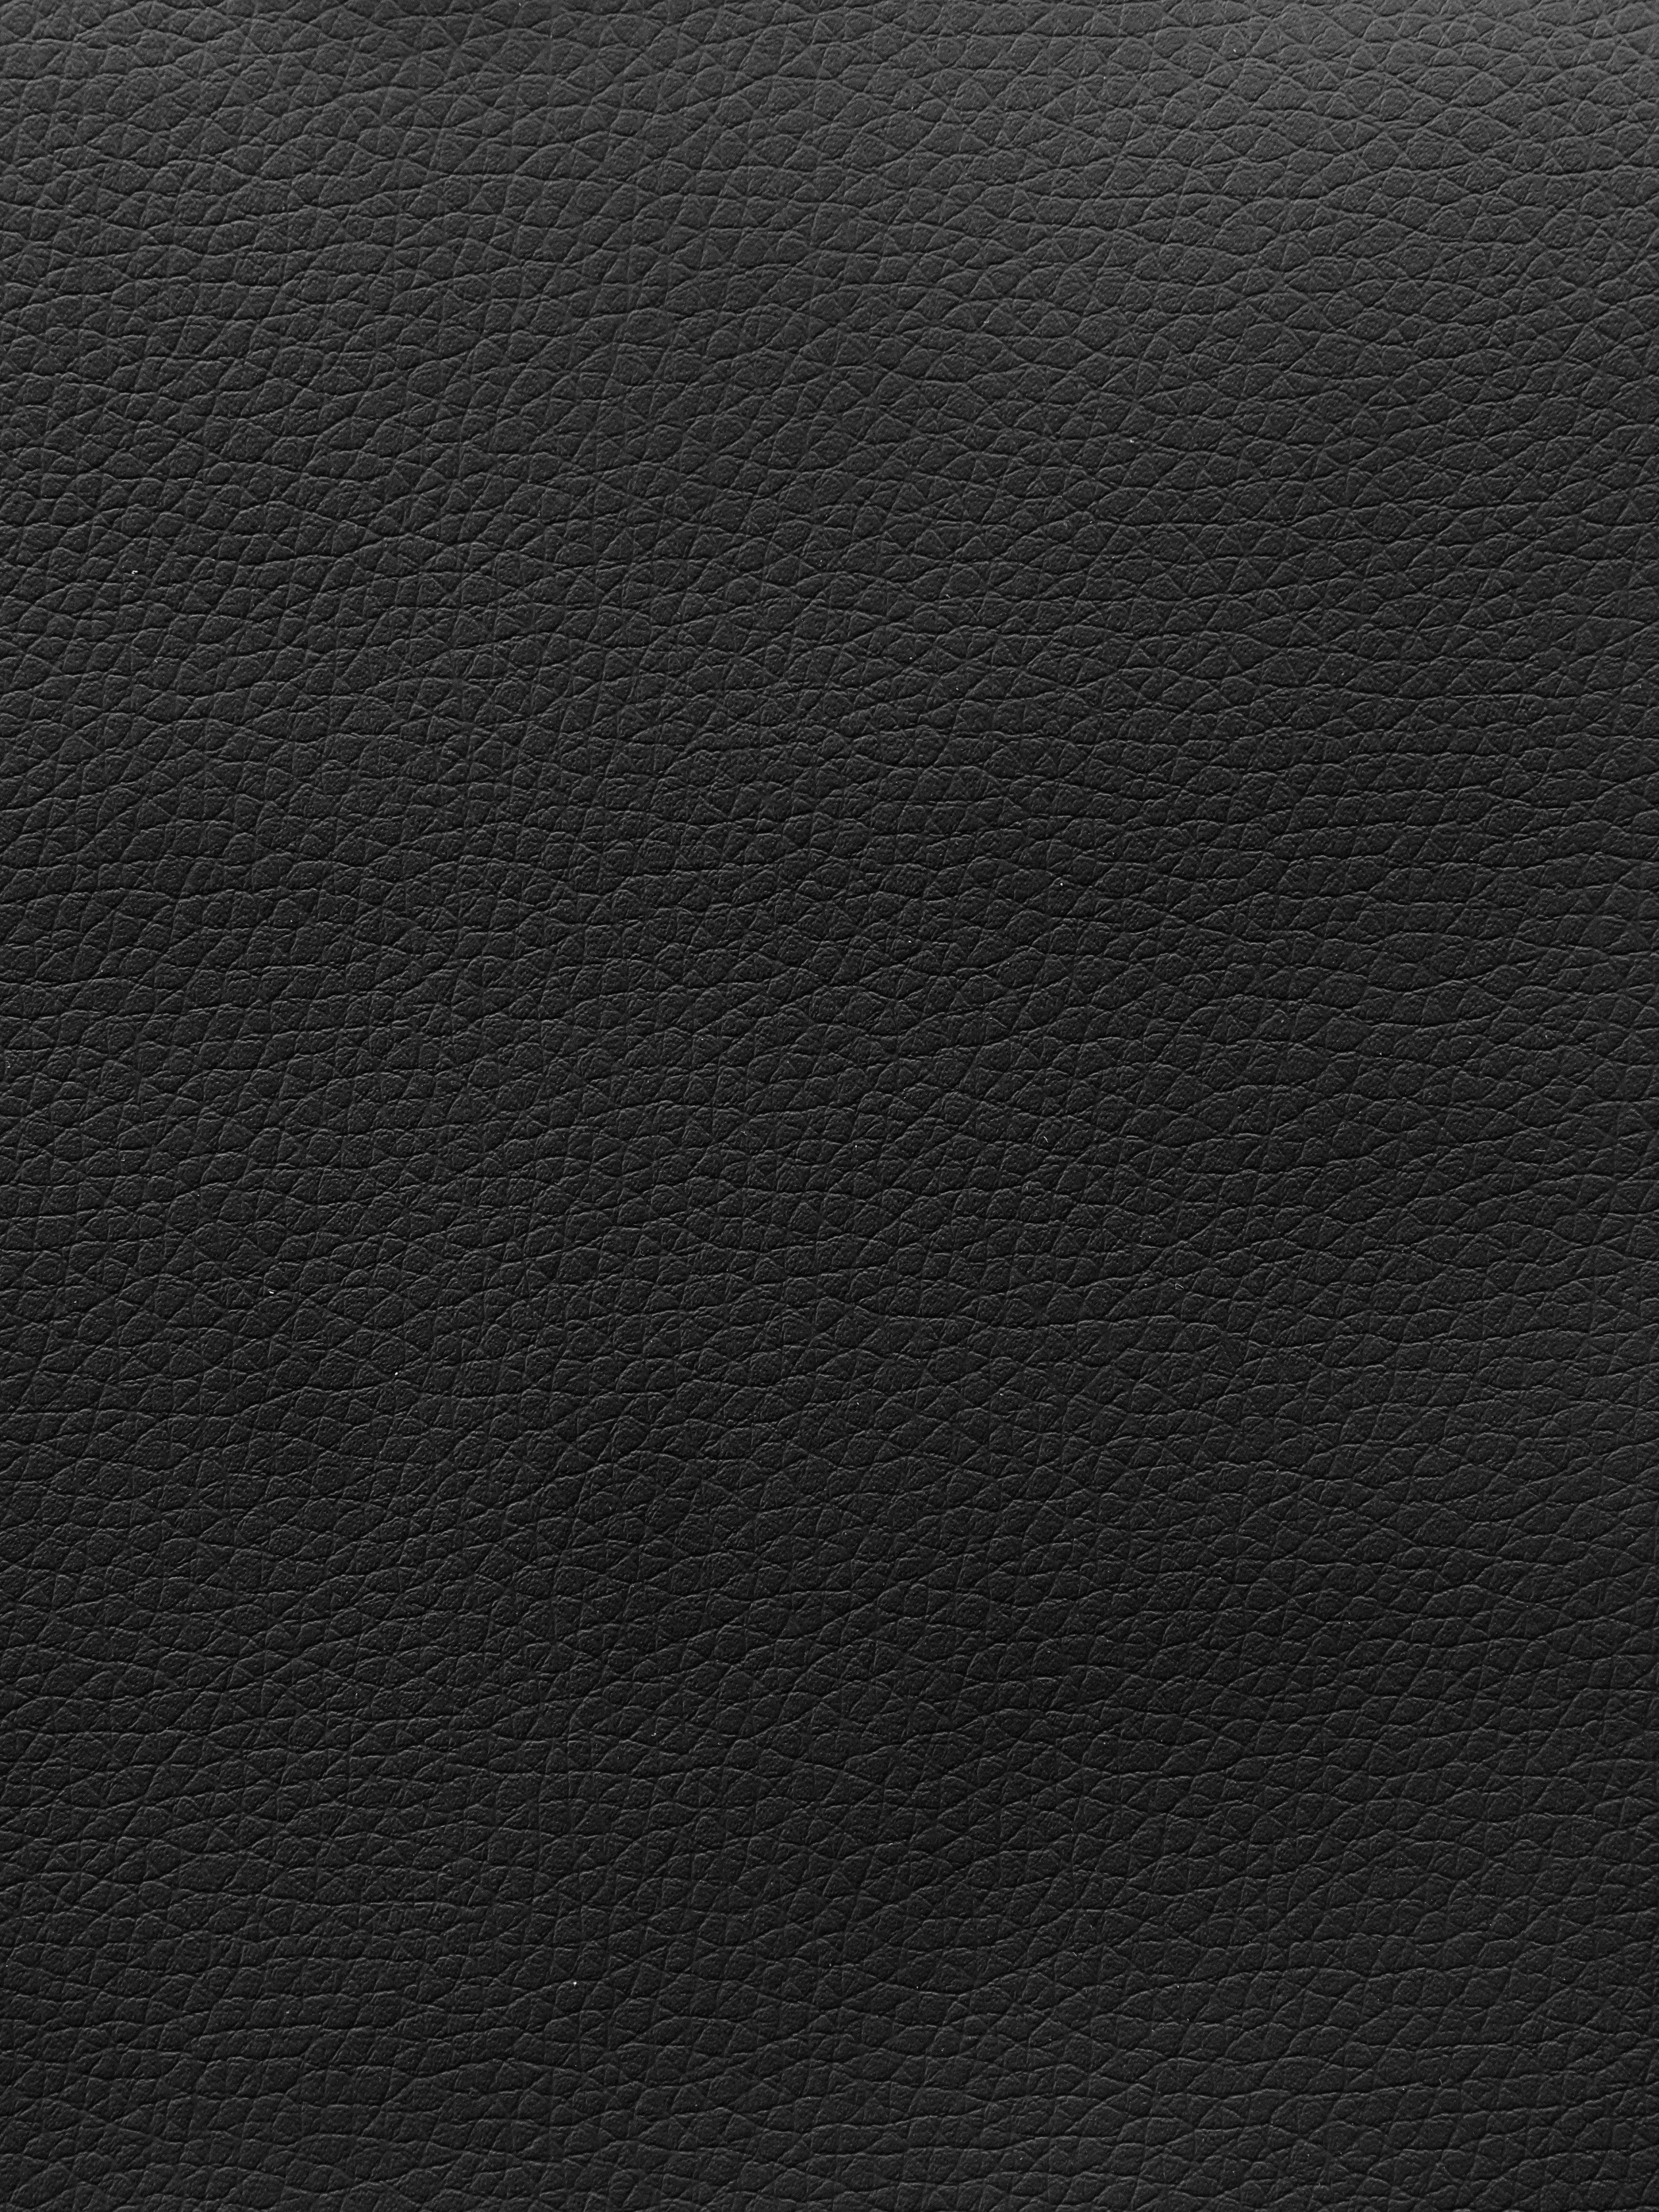 Black Leather Texture Dark Embossed Fabric Free Stock Photo